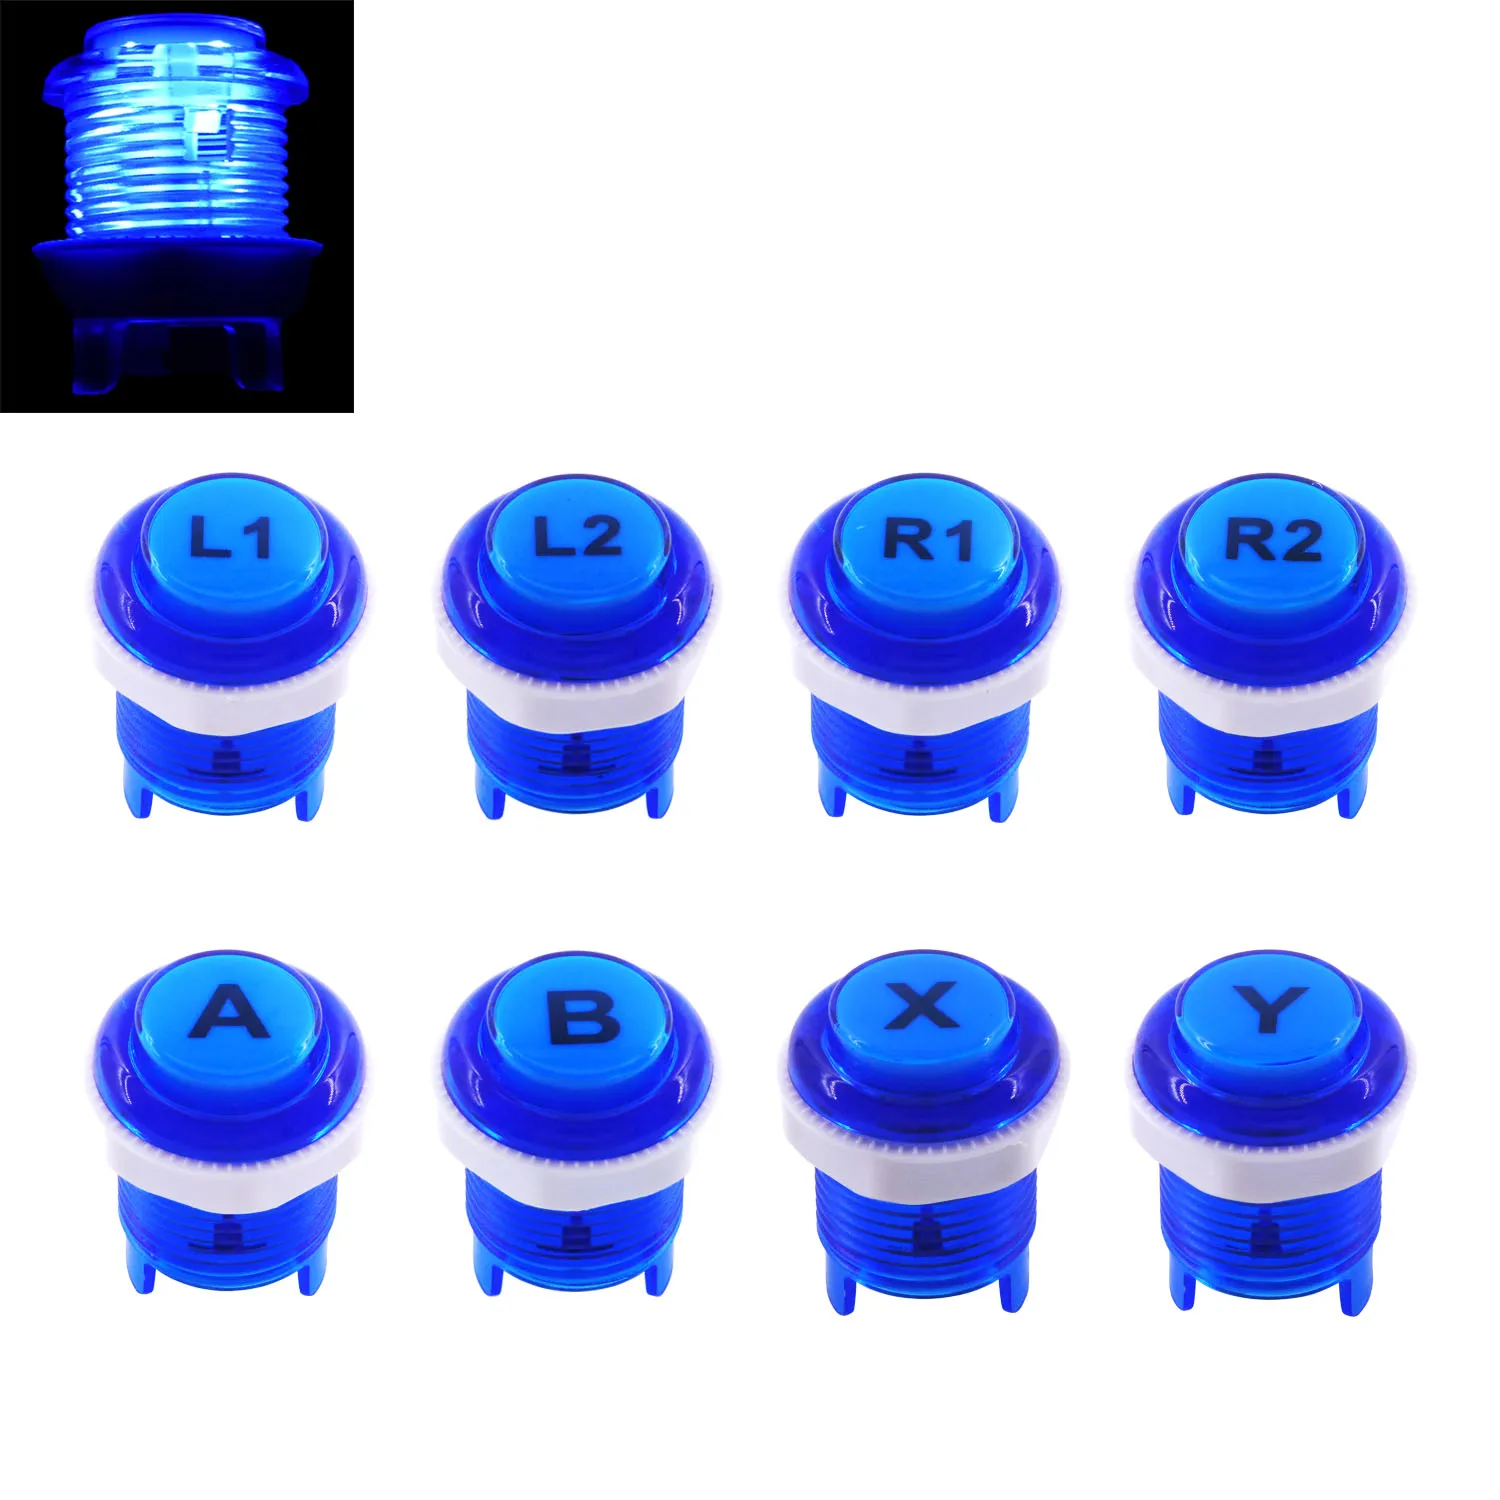 SJ@ JX 8 шт. светодиодный кнопки для аркадных игр с логотипом Cherry MX Microswitch X Y Start выберите для PC MAME Raspberry Pi - Цвет: Синий